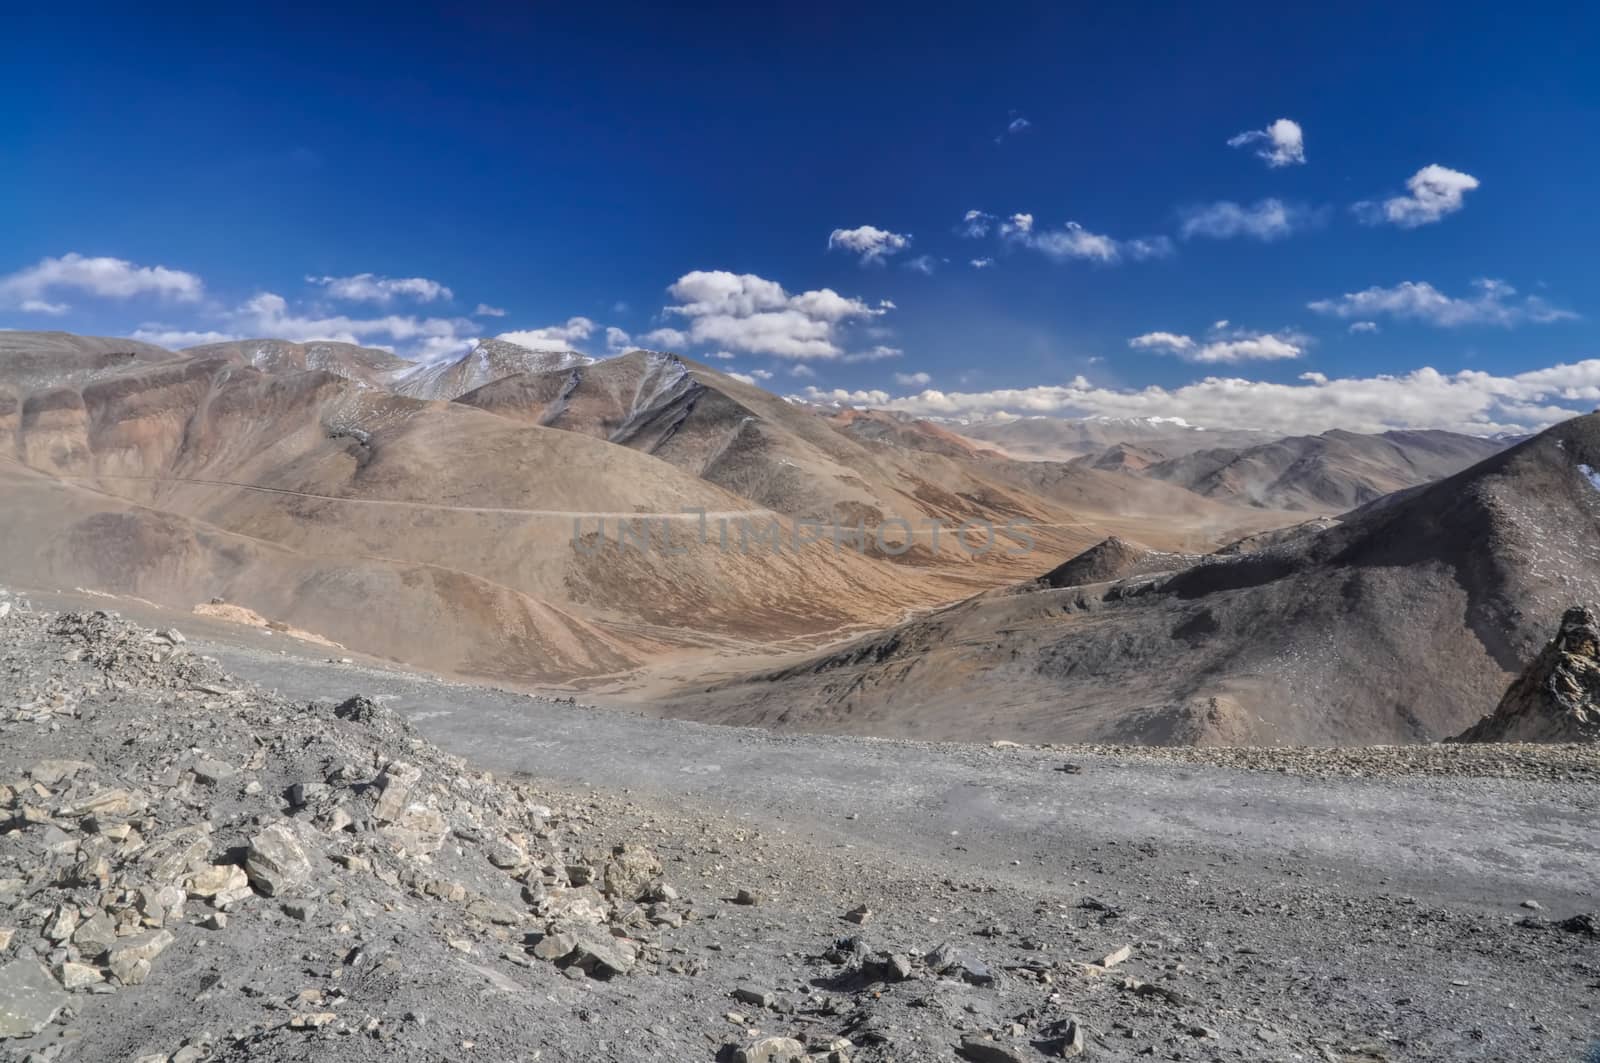 Road to Ladakh by MichalKnitl